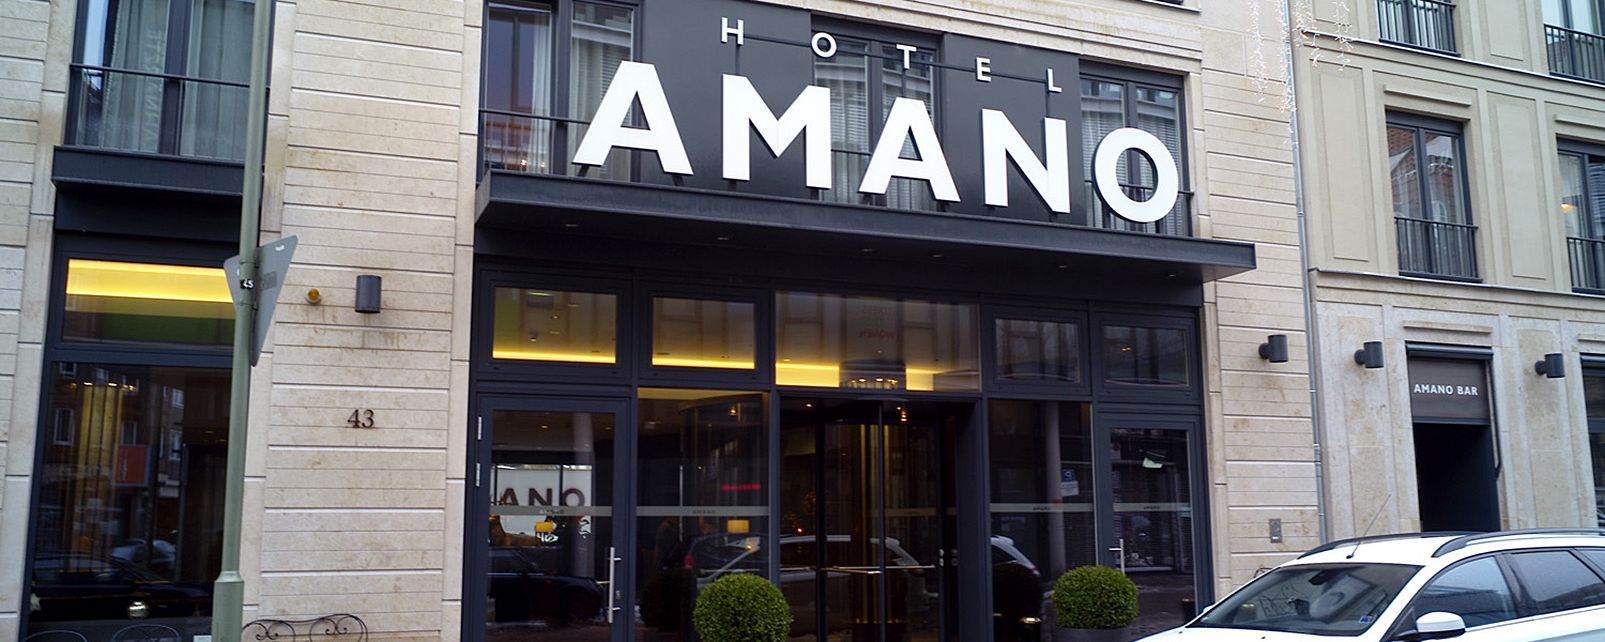 Hotel Amano